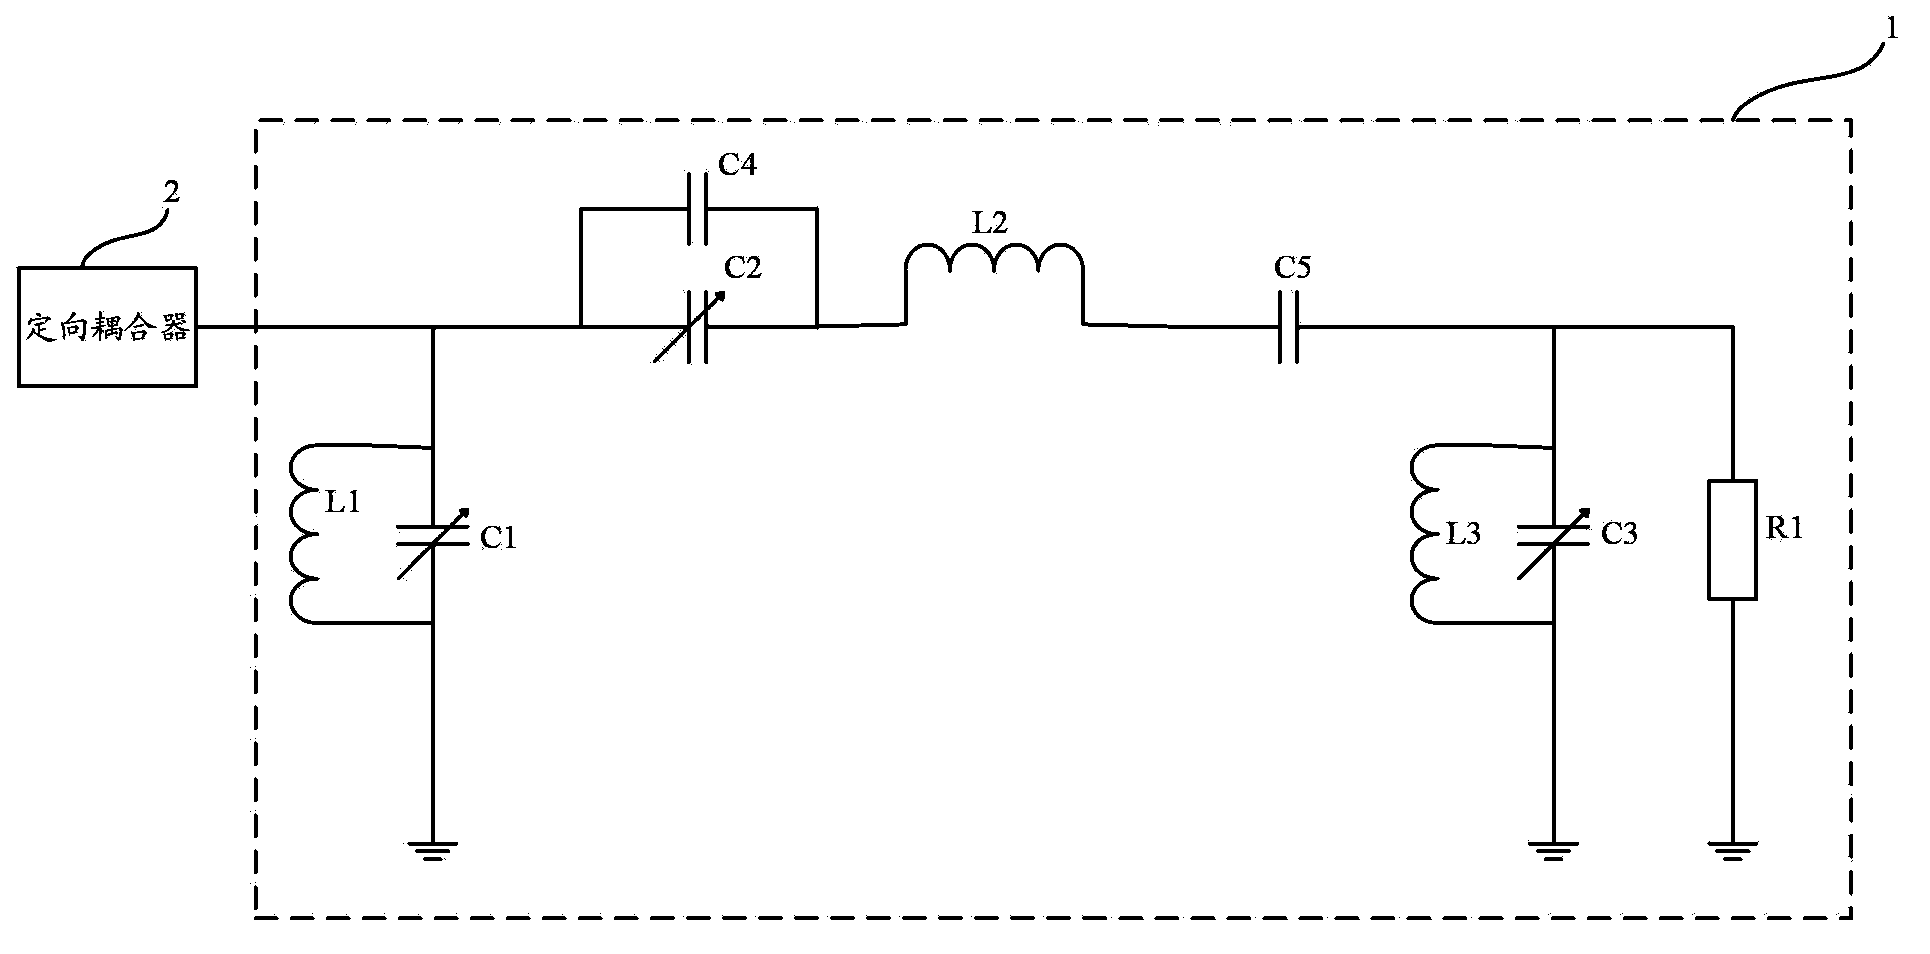 Carrier wave offset circuit based on RFID reader-writer, and RFID reader-writer